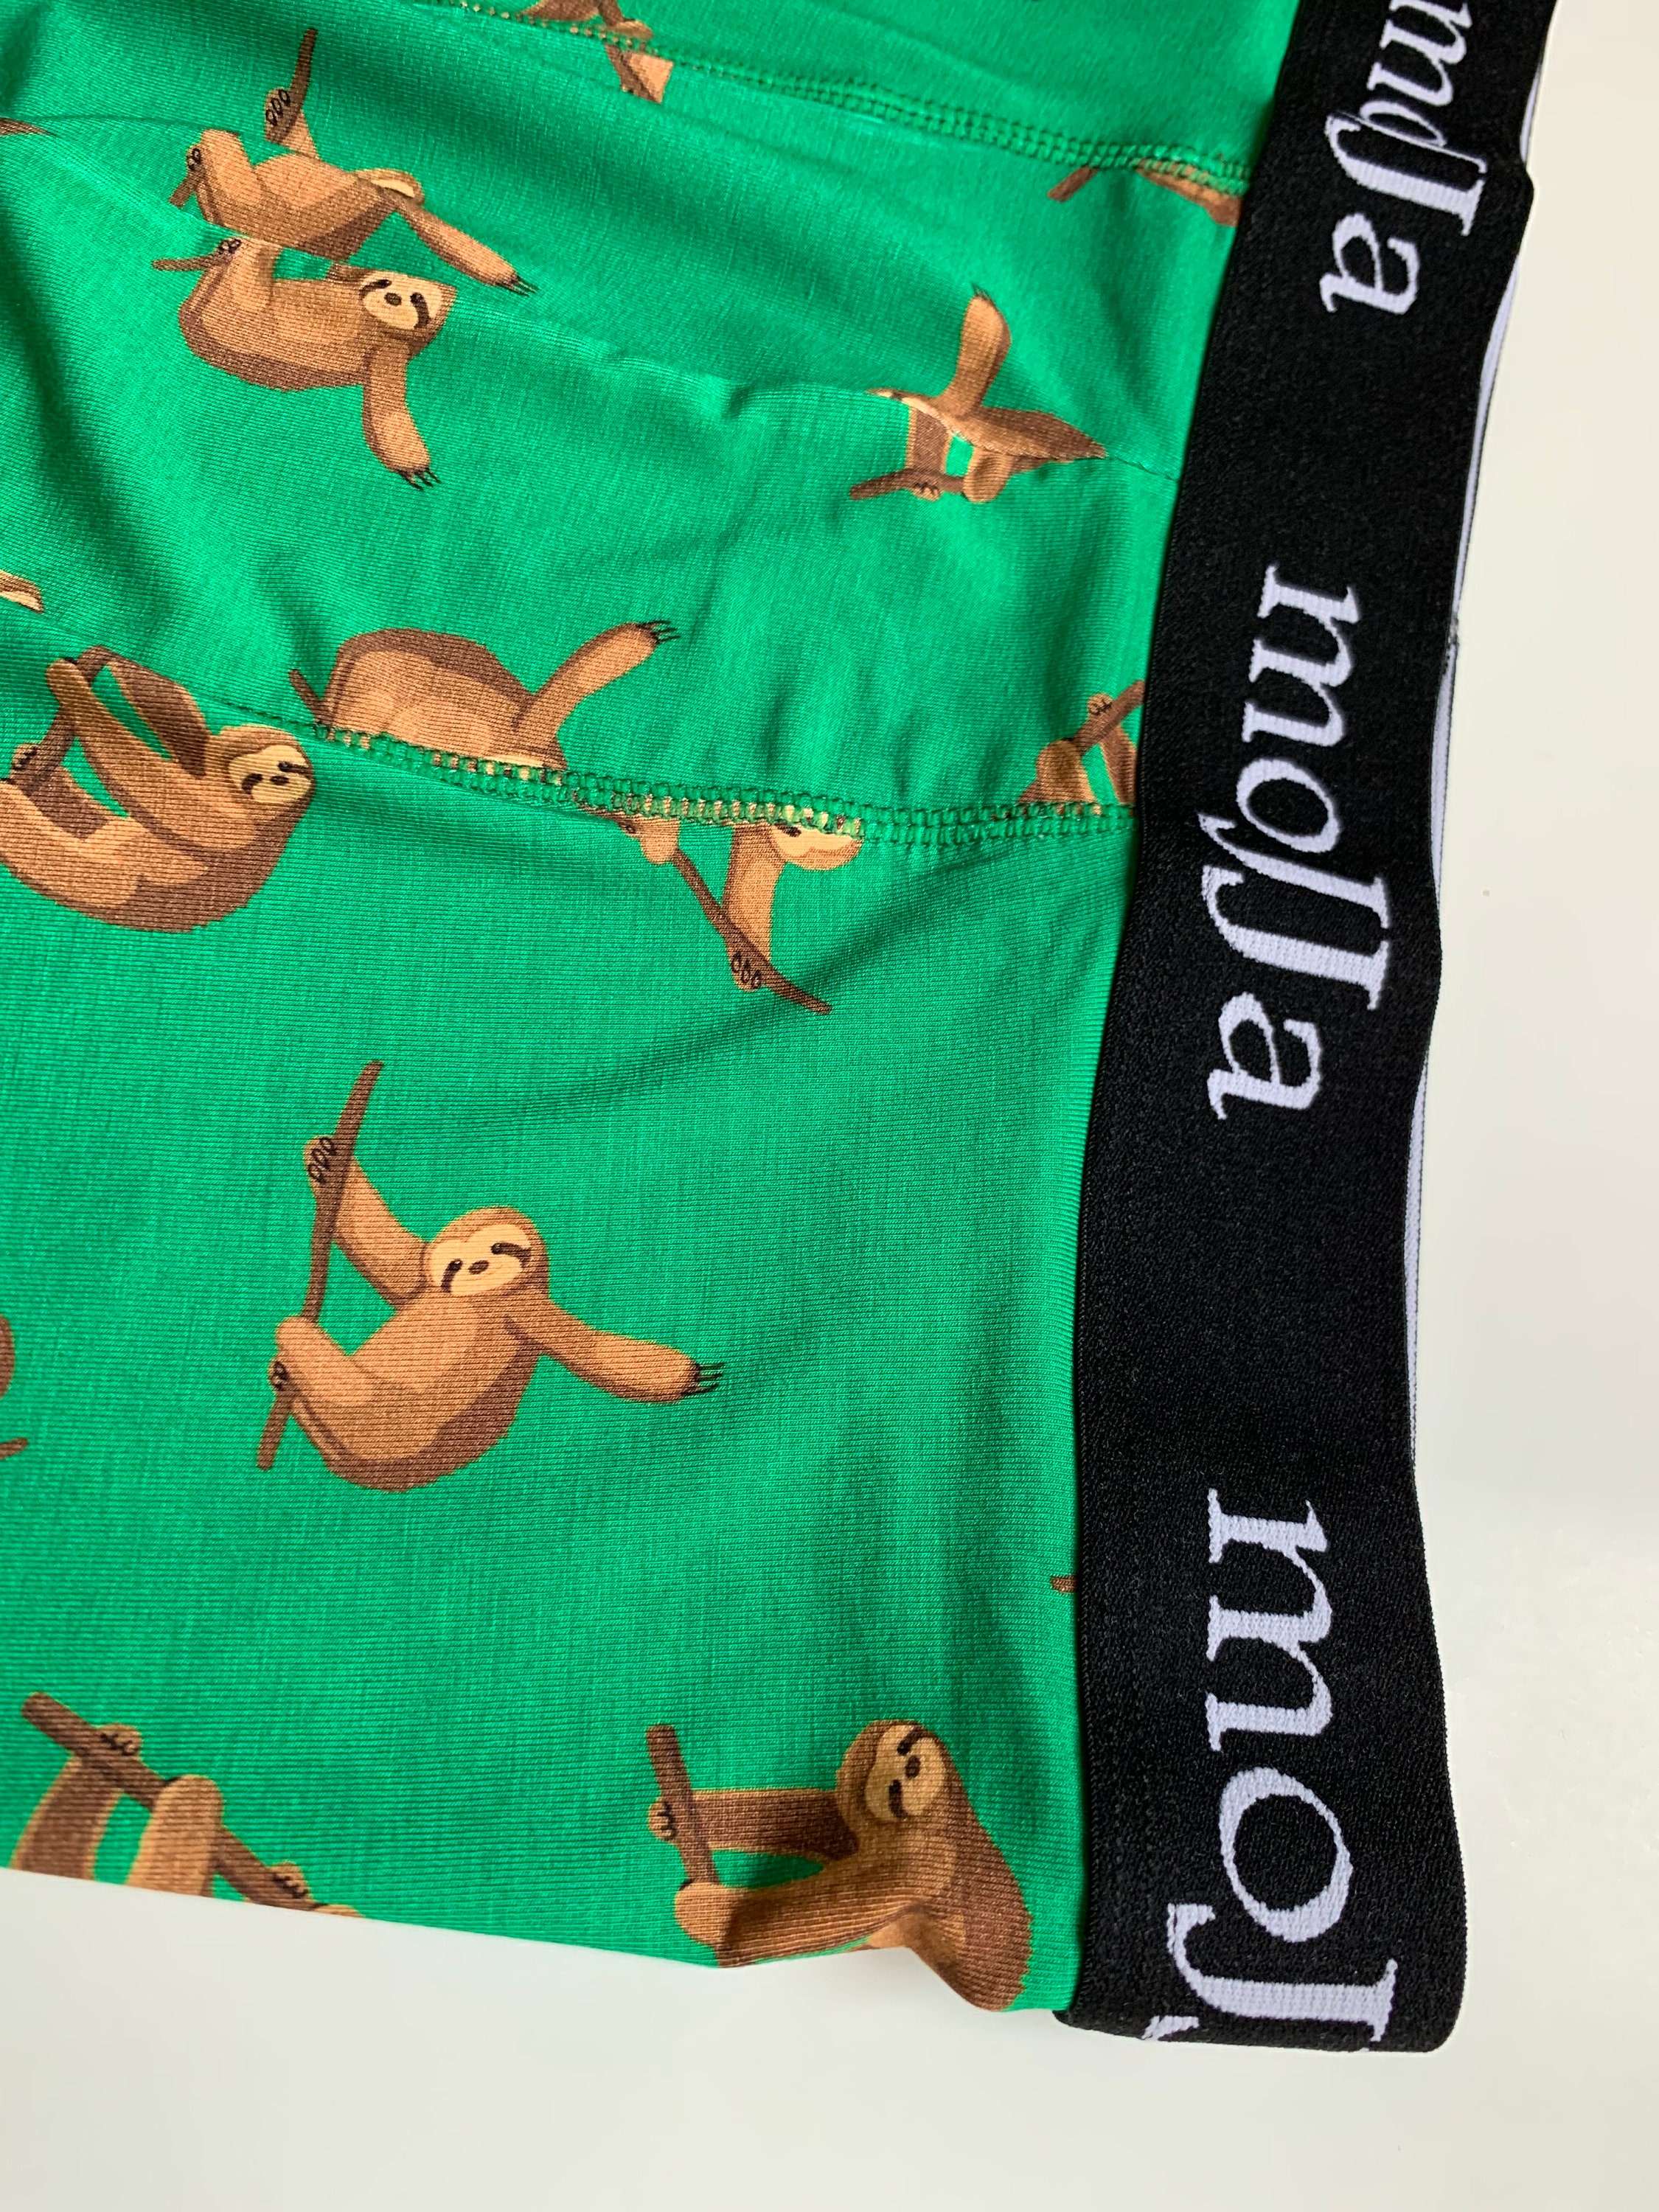 Sloths Boxer Briefs Modal Underwear Fun Gitch Groom Comfortable Undies  Novelty Gifts for Men Him Men's Boxers 